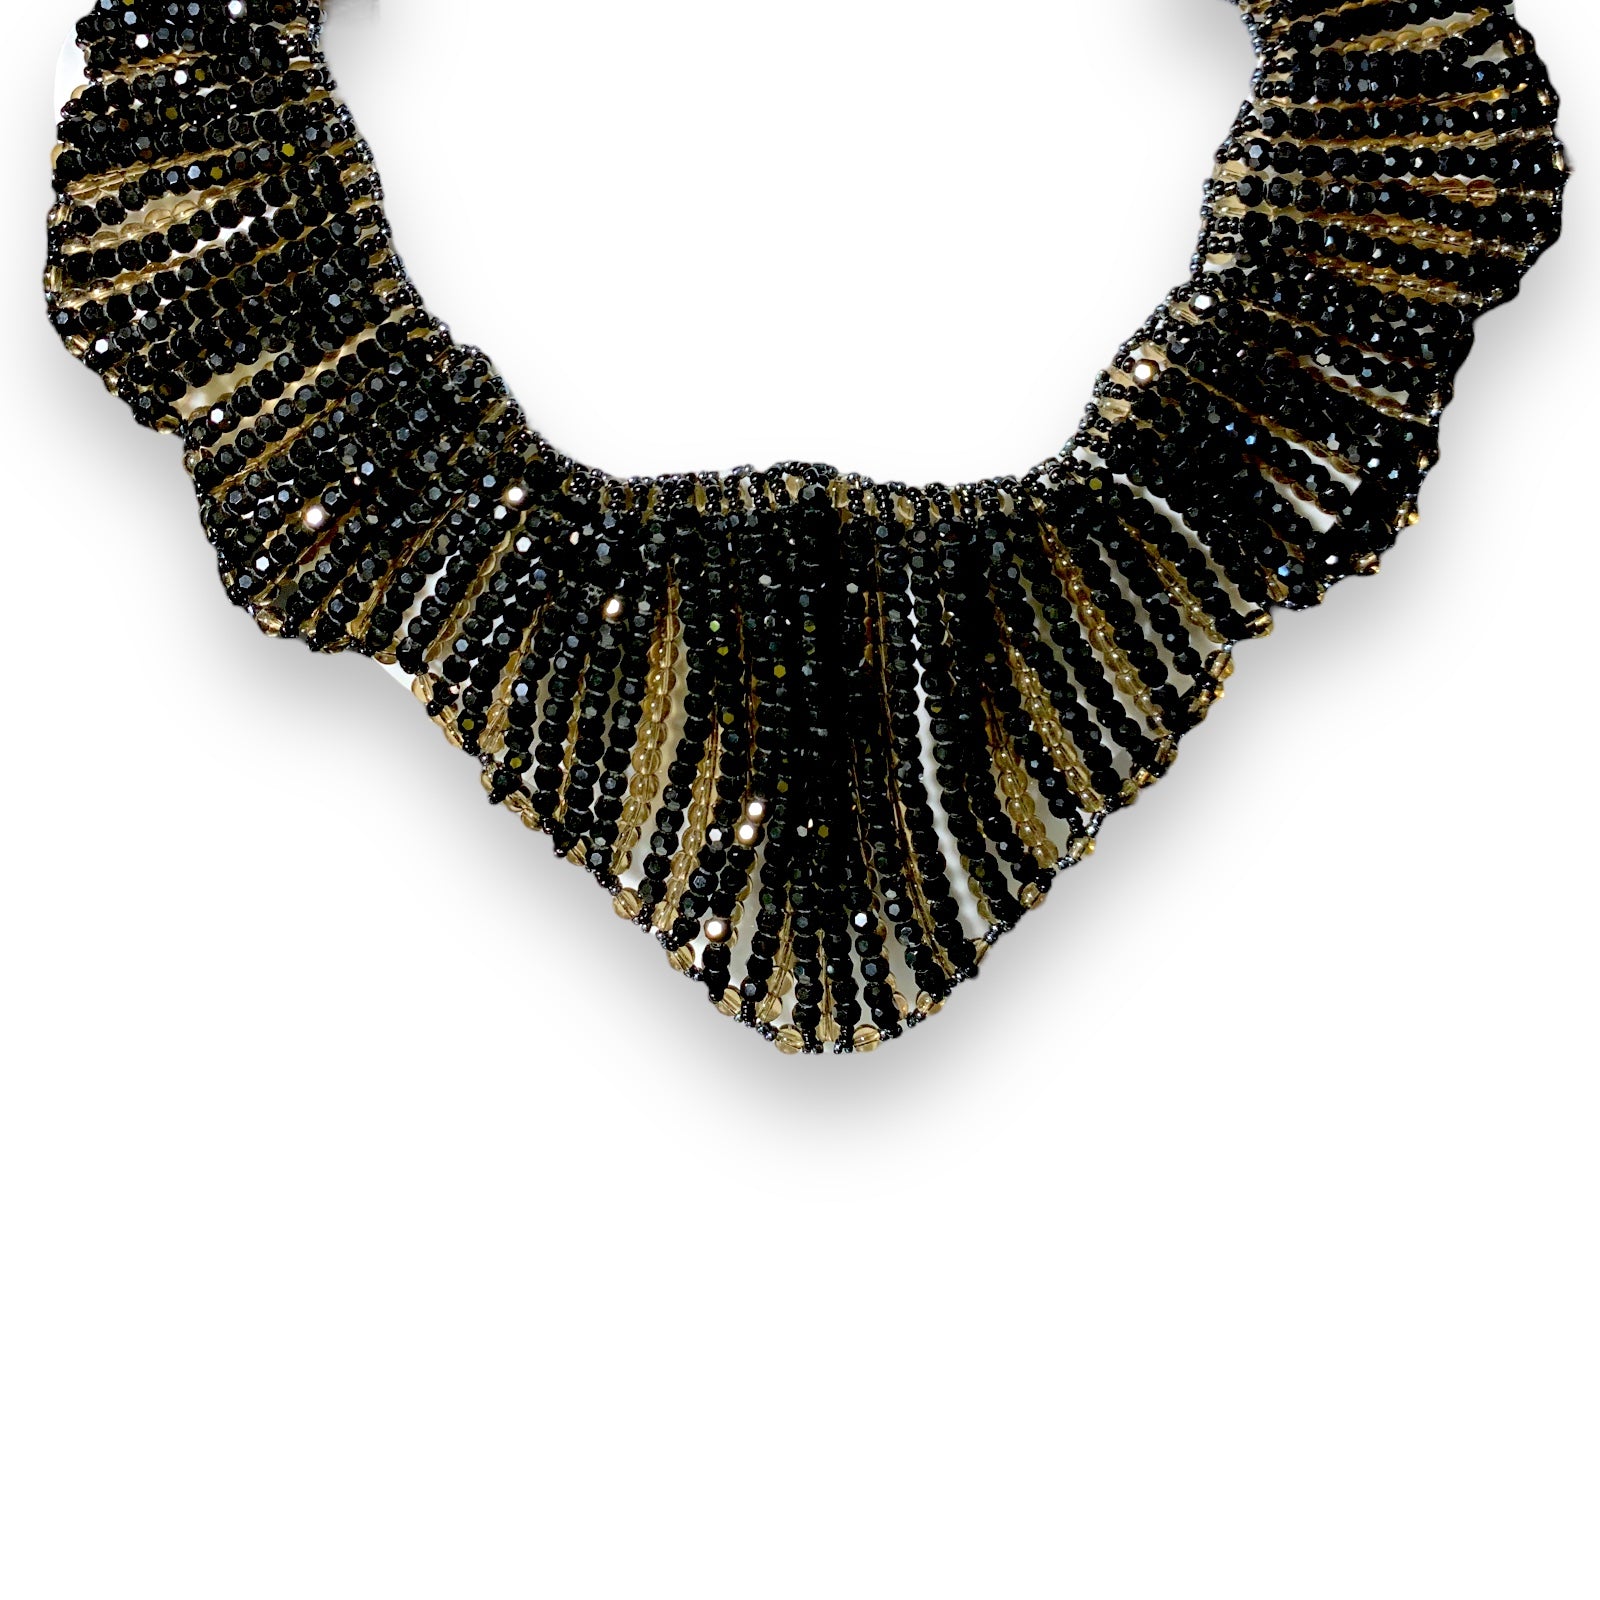 Handmade Collar Necklace 20" Black Bead Stole Collar Choker Jewelry